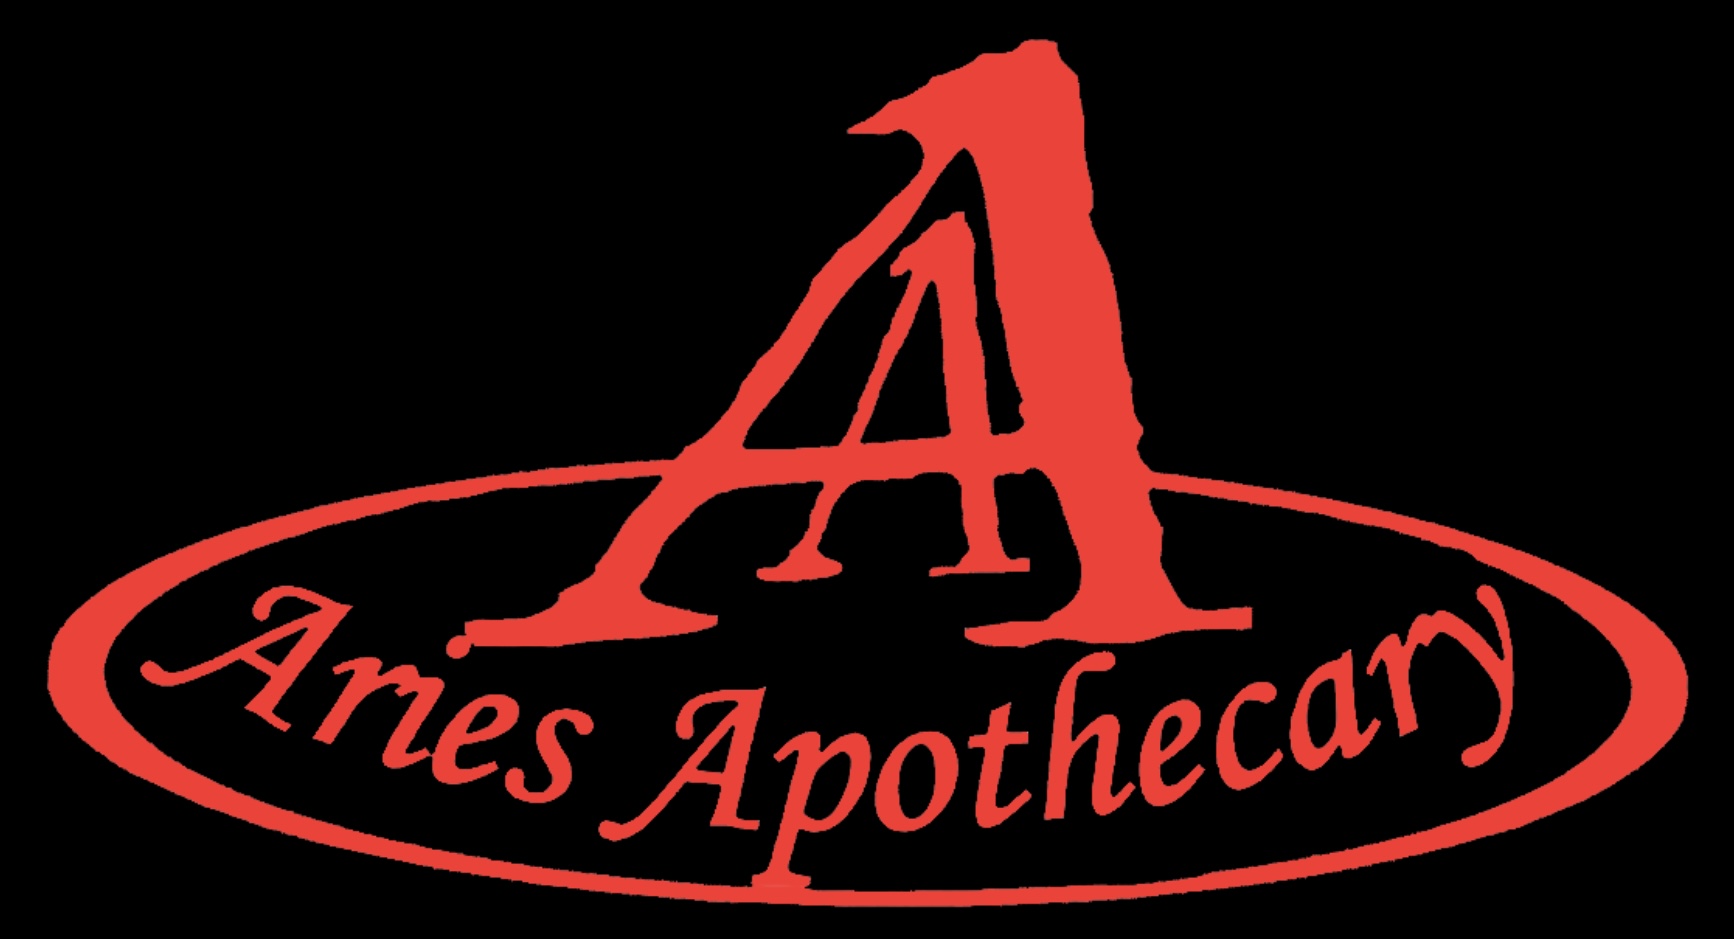 Aries Apothecary, LLC